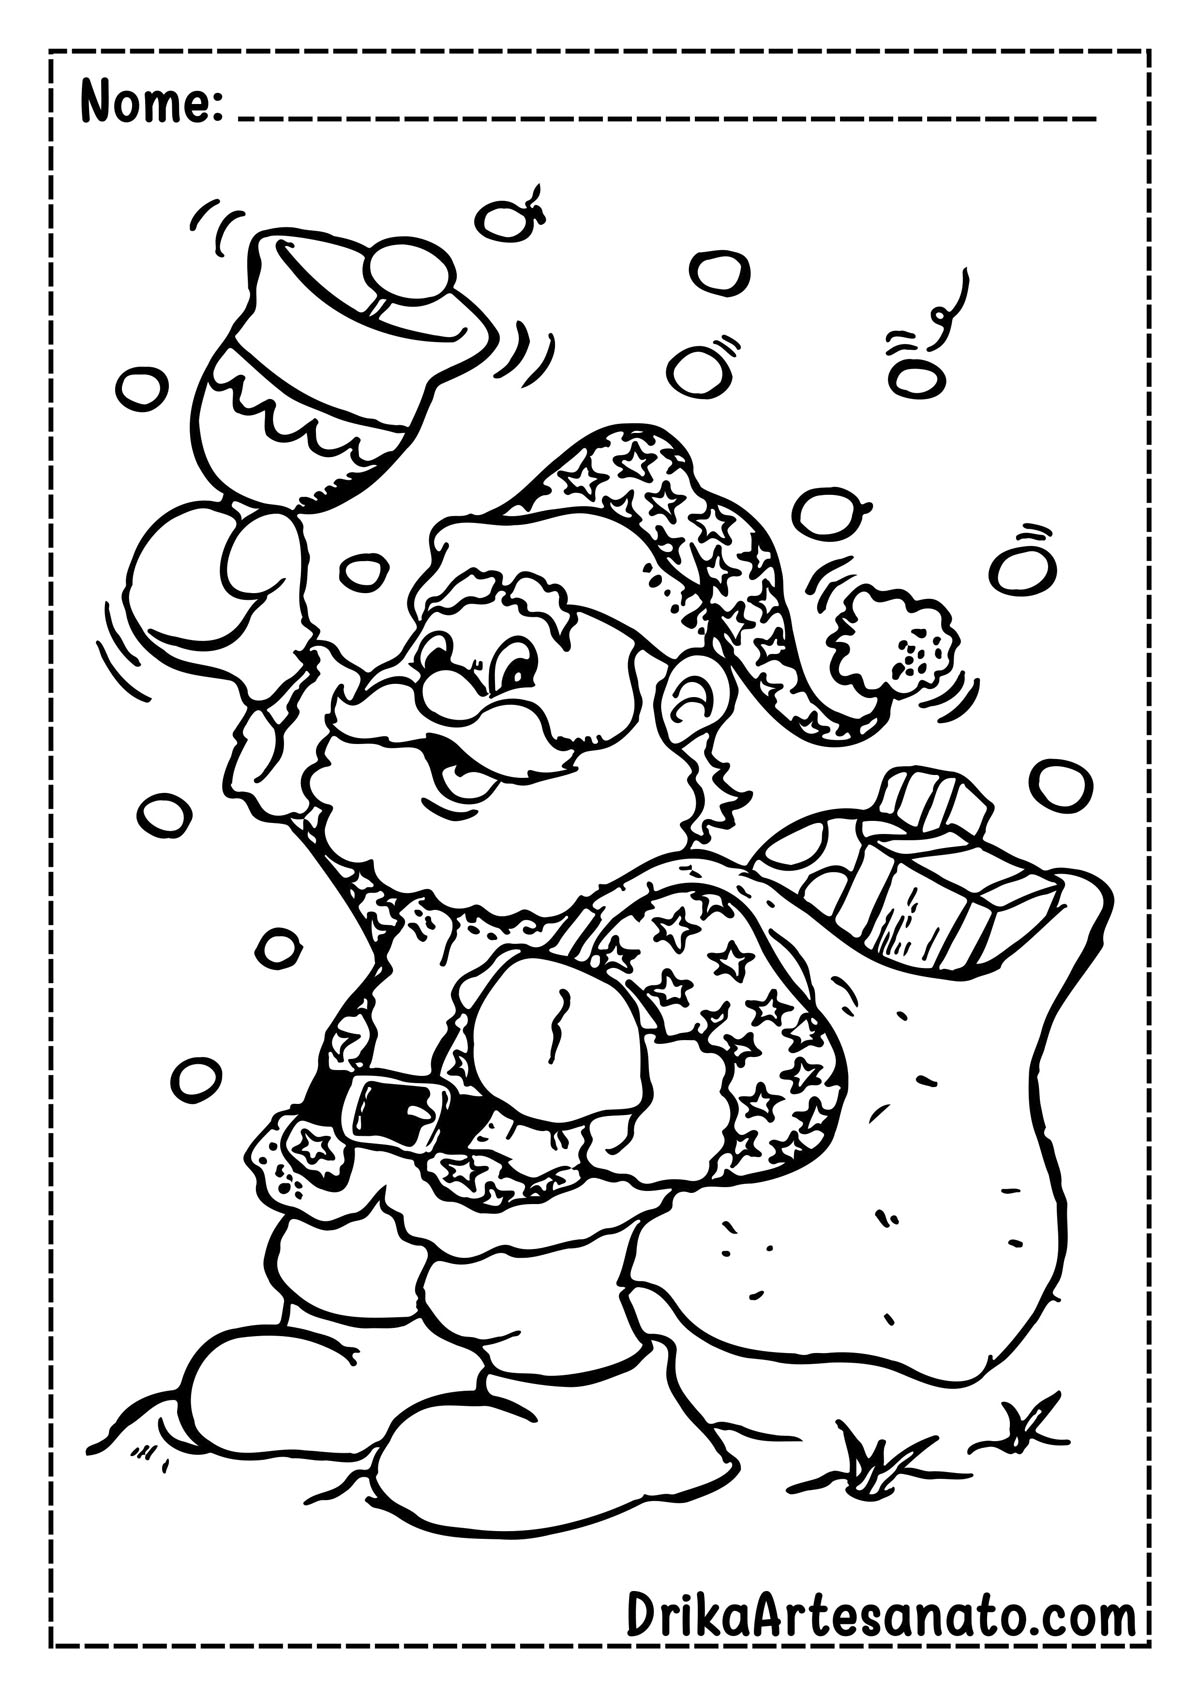 Desenho de Papai Noel para Colorir e Imprimir